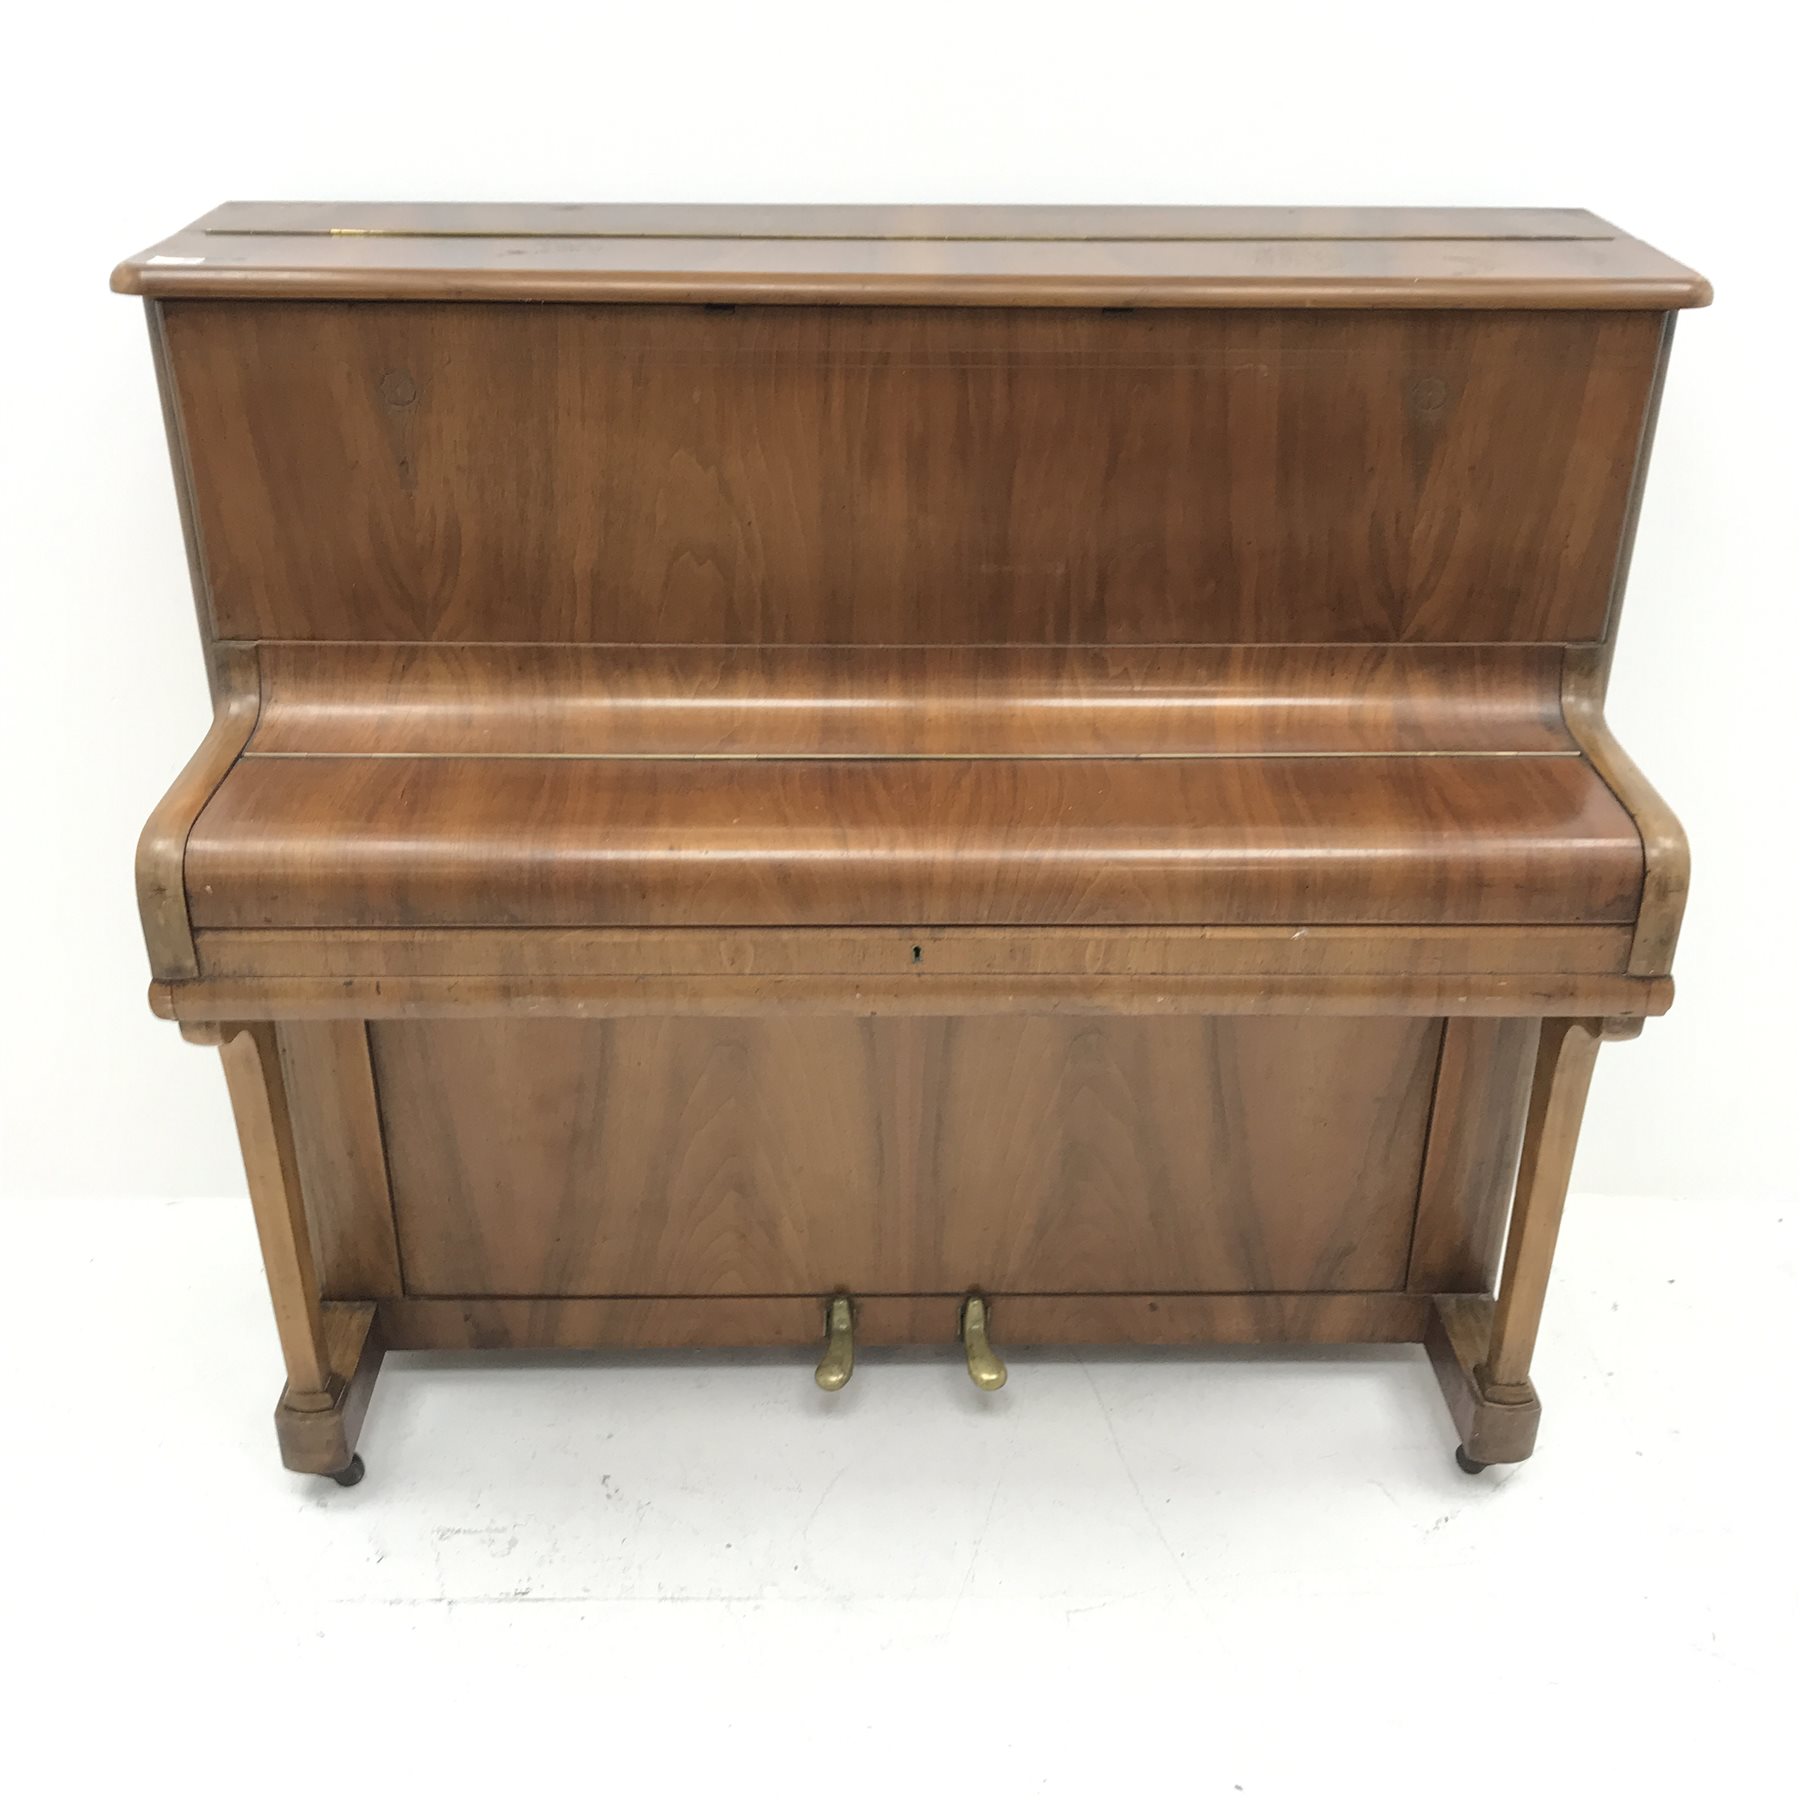 Godfrey walnut cased overstrung upright piano, W124cm, H113cm - Image 3 of 10